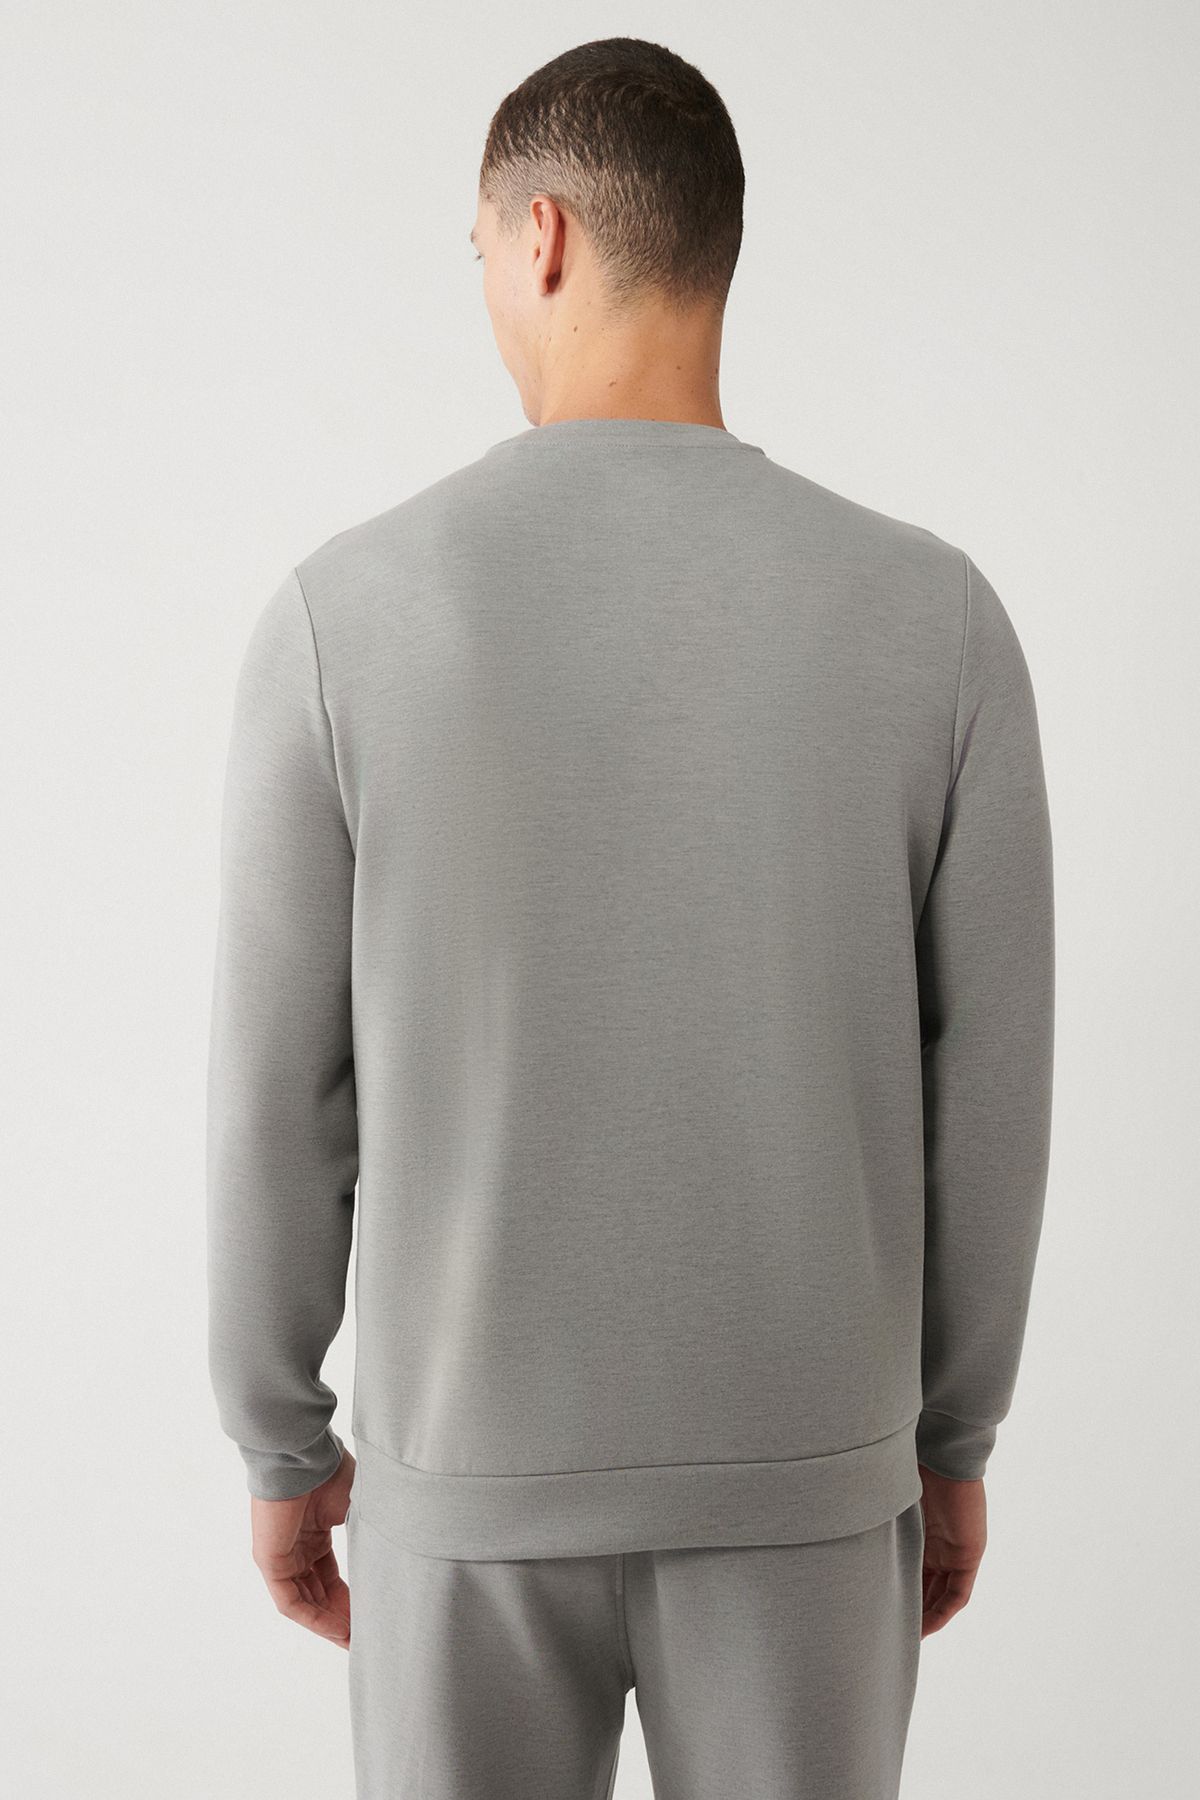 Avva پیراهن خاکستری مردانه یقه نرم دوچرخه چاپ شده به طور منظم A32Y1285